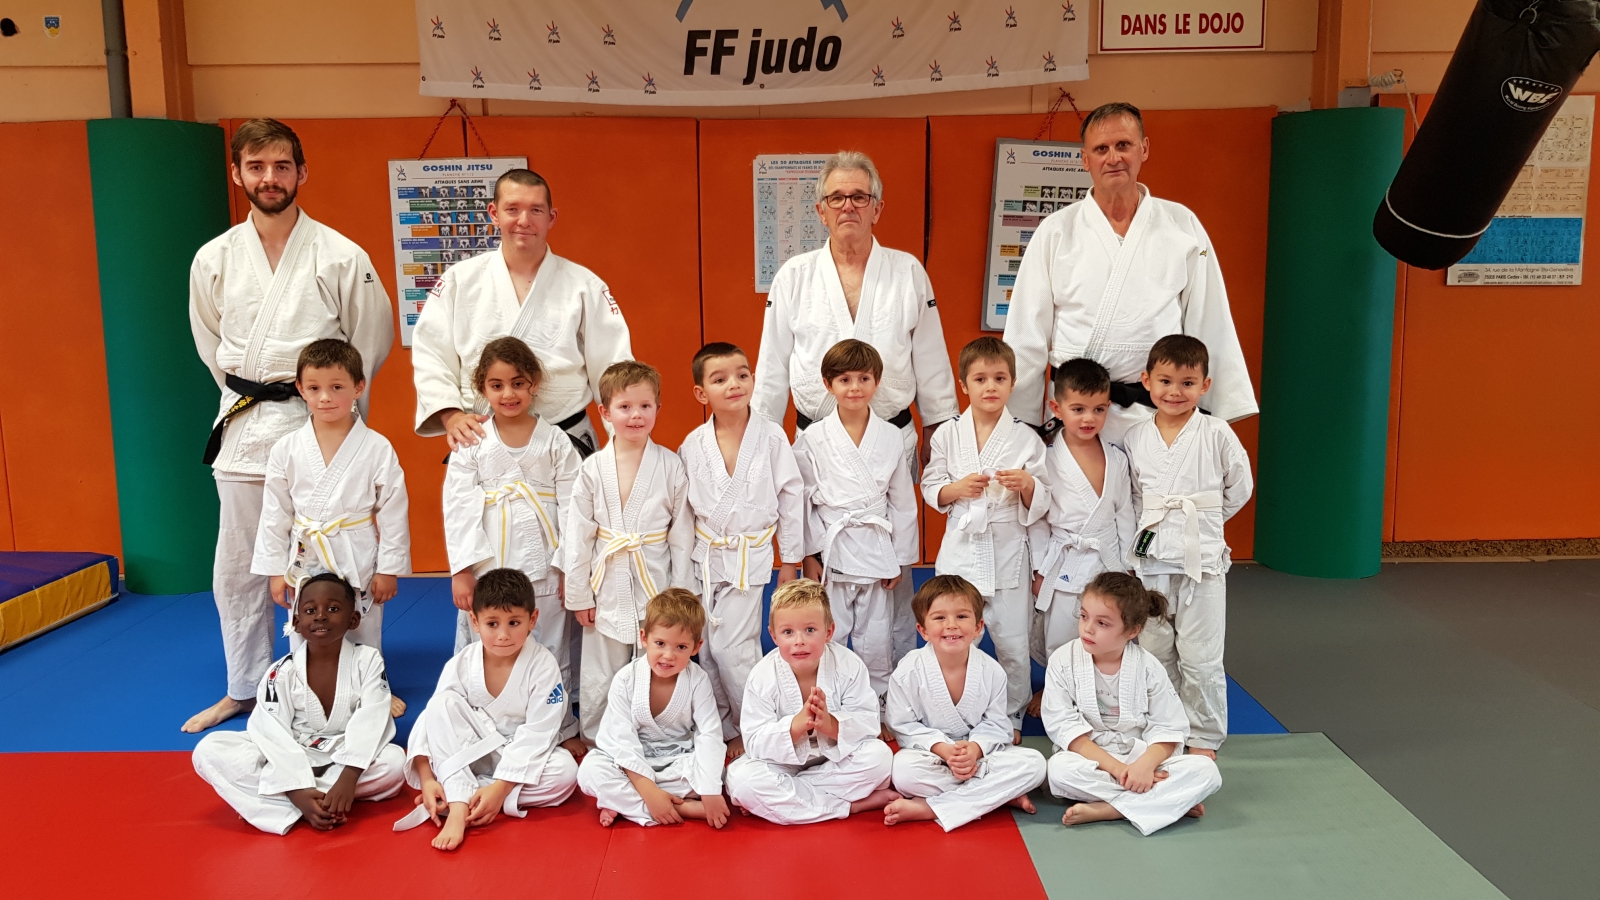 Les judoka et encadrants de Vineuil